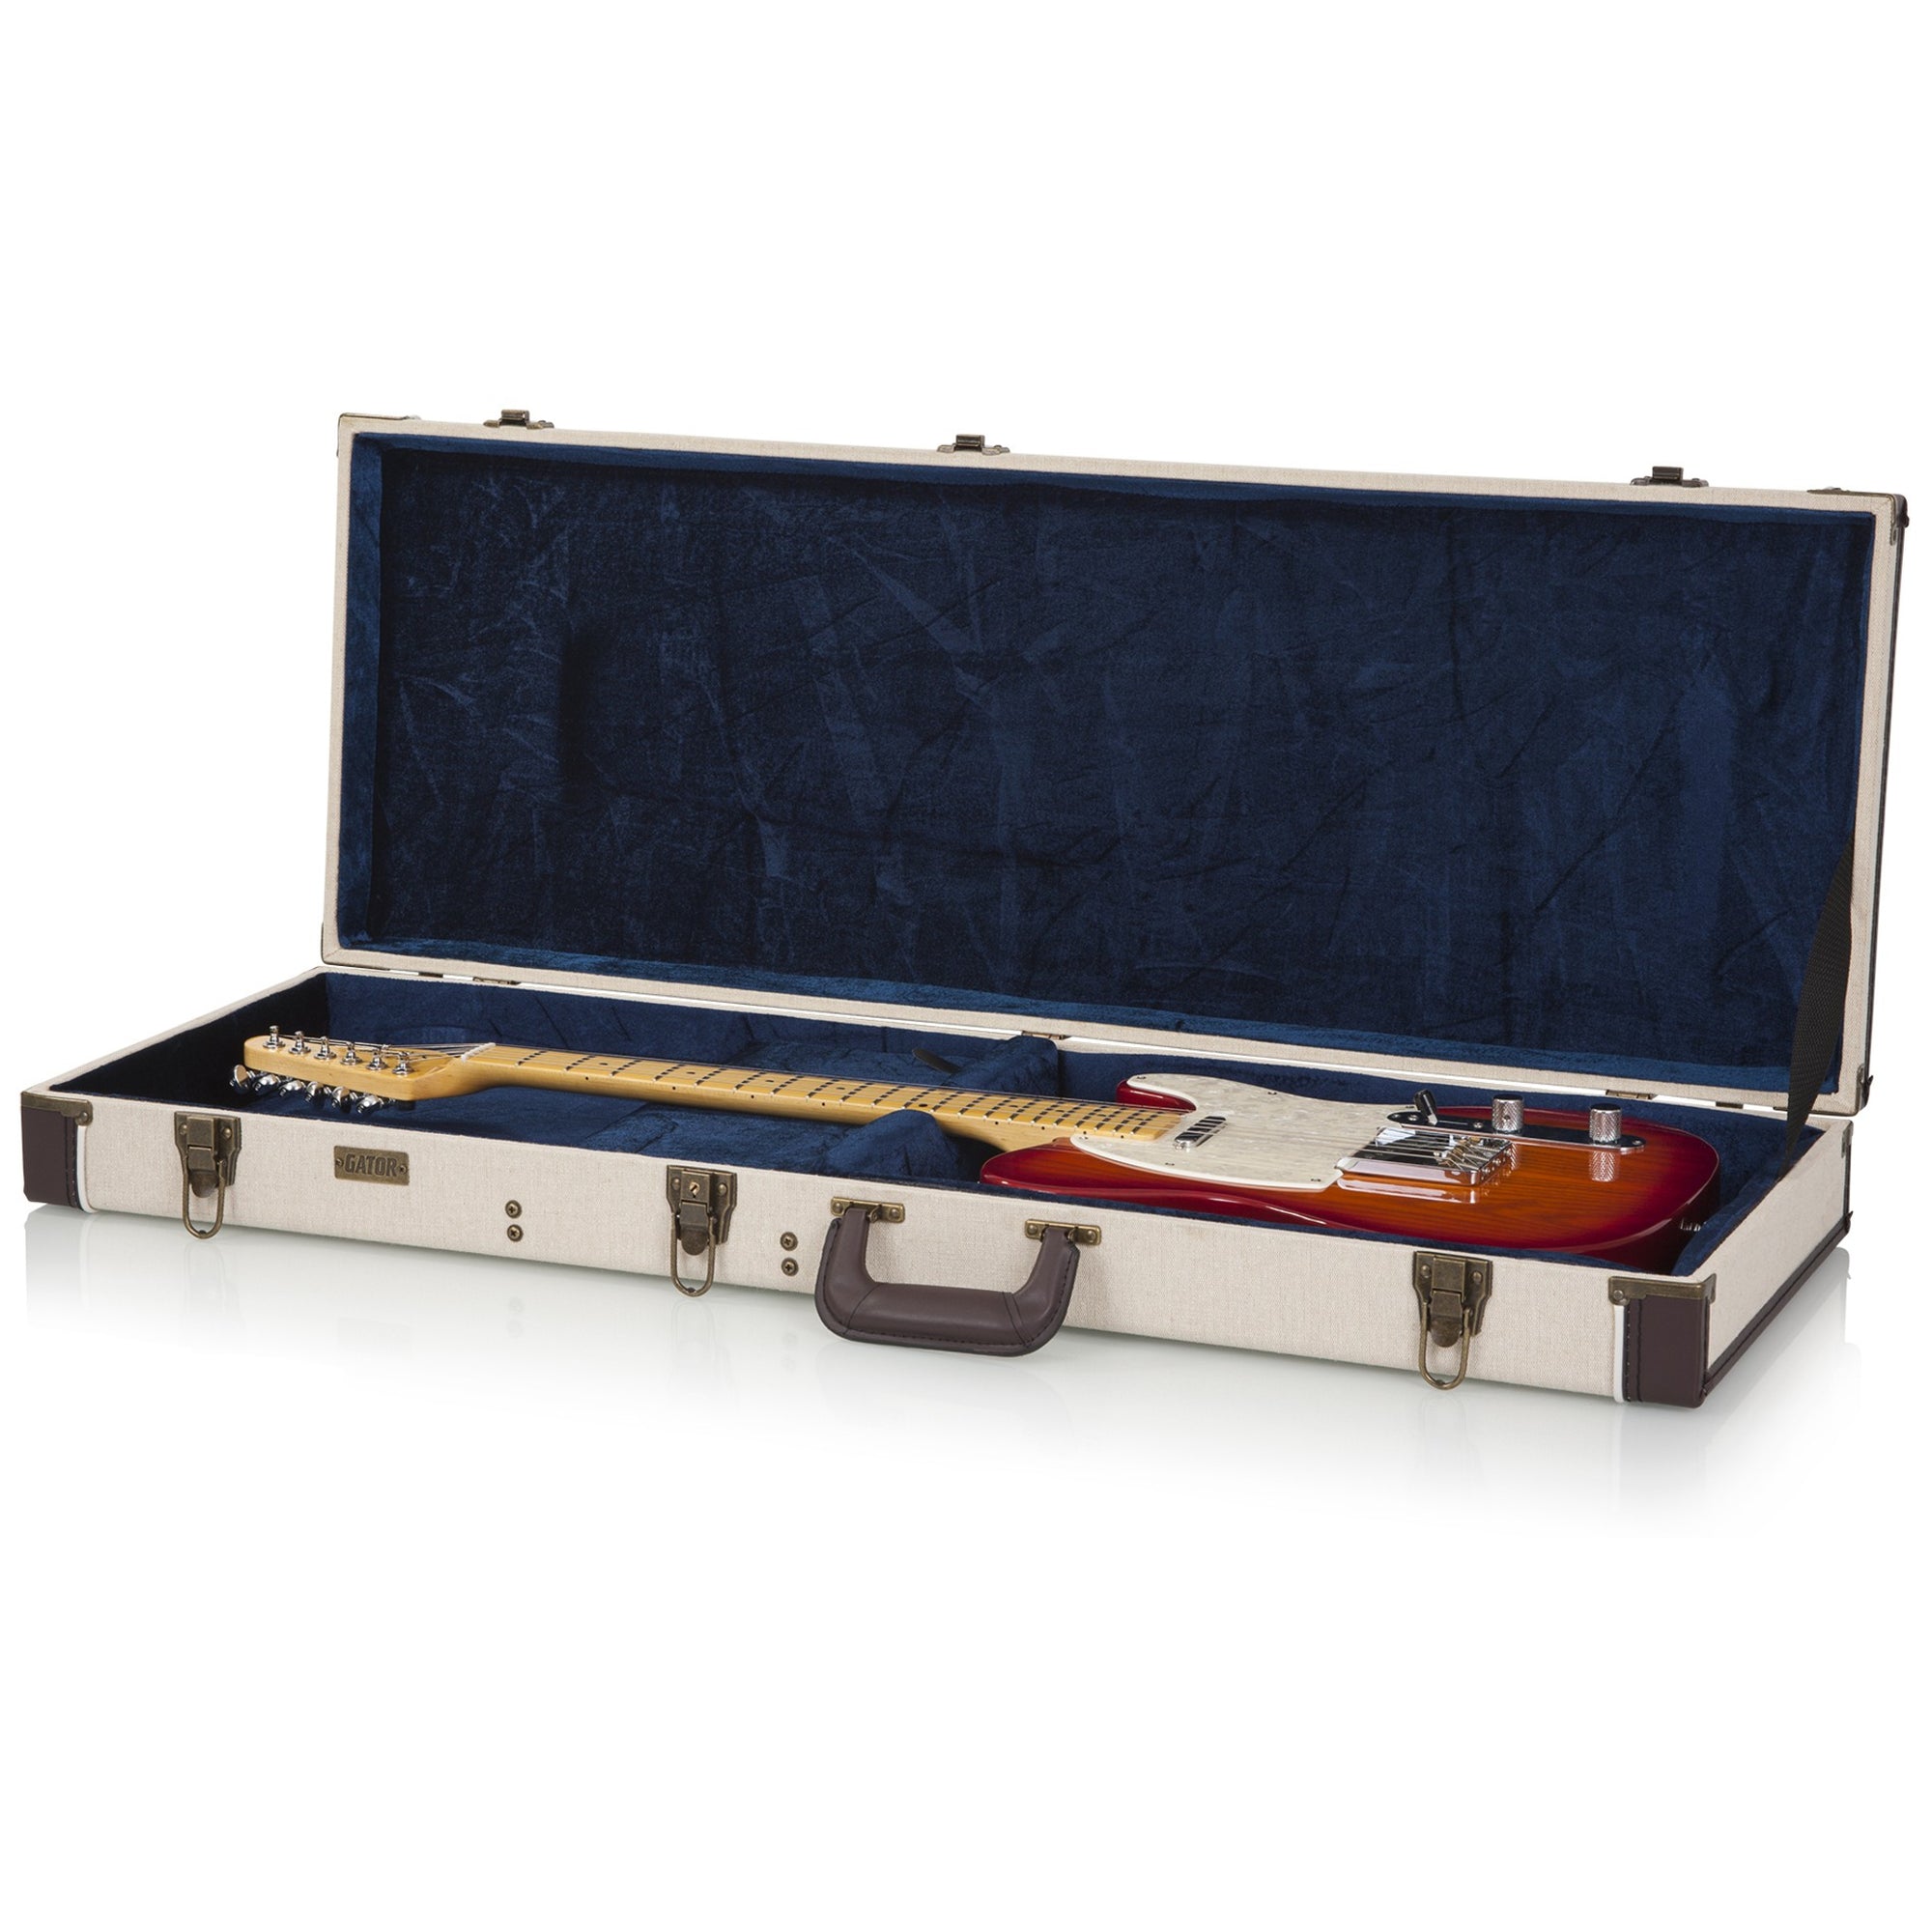 Gator Electric Guitar Journeyman Deluxe Wood Case GW-JM ELEC Open Case with Guitar inside